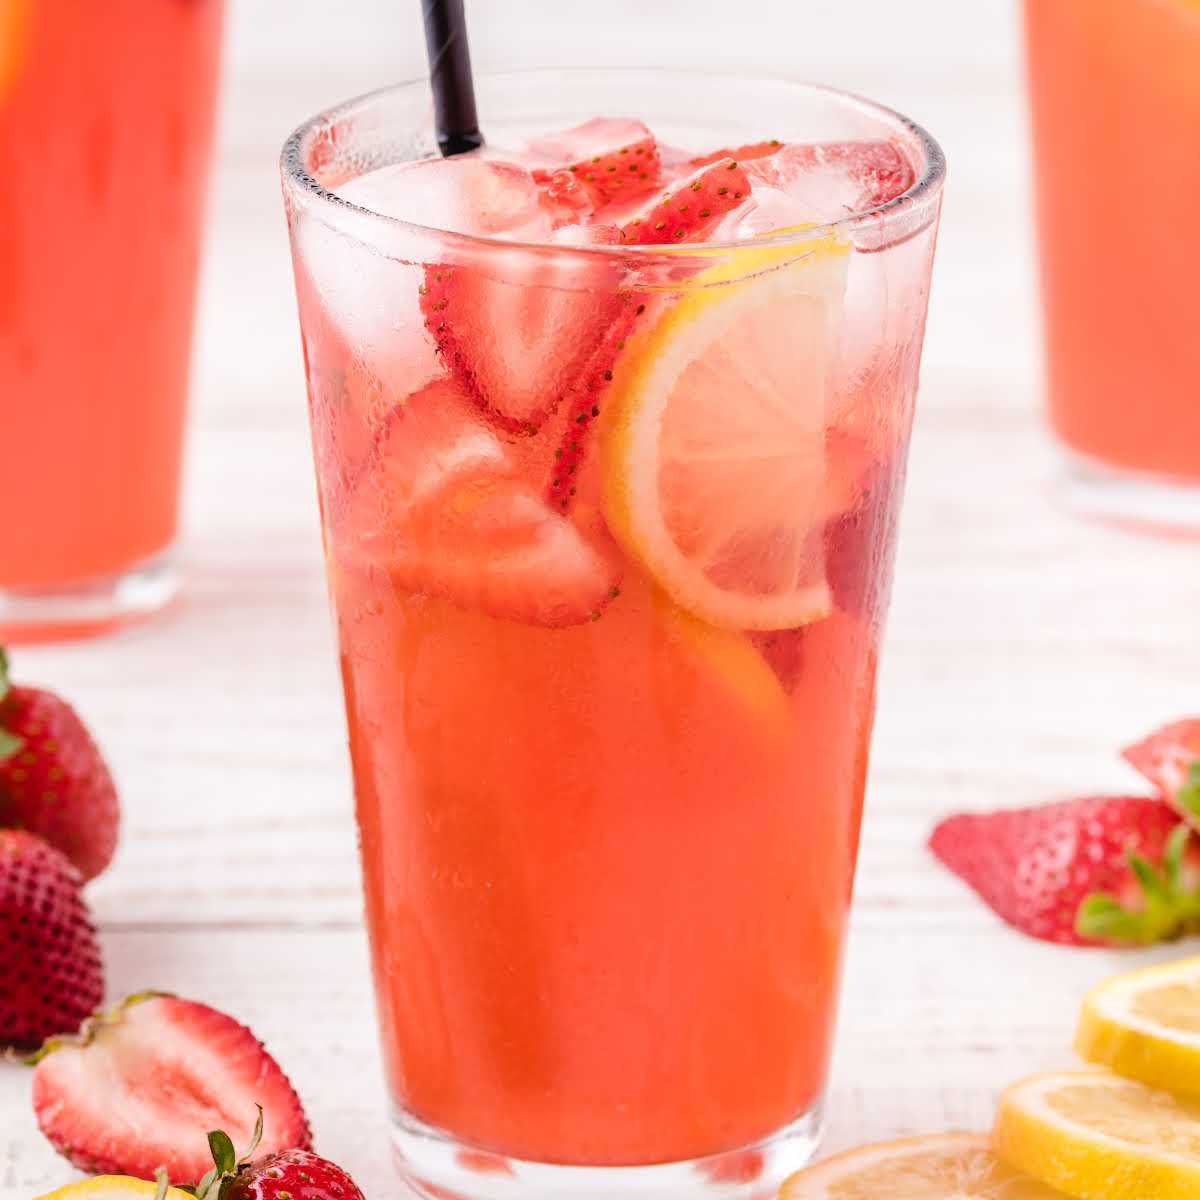 strawberry-lemonade manicure pedicure